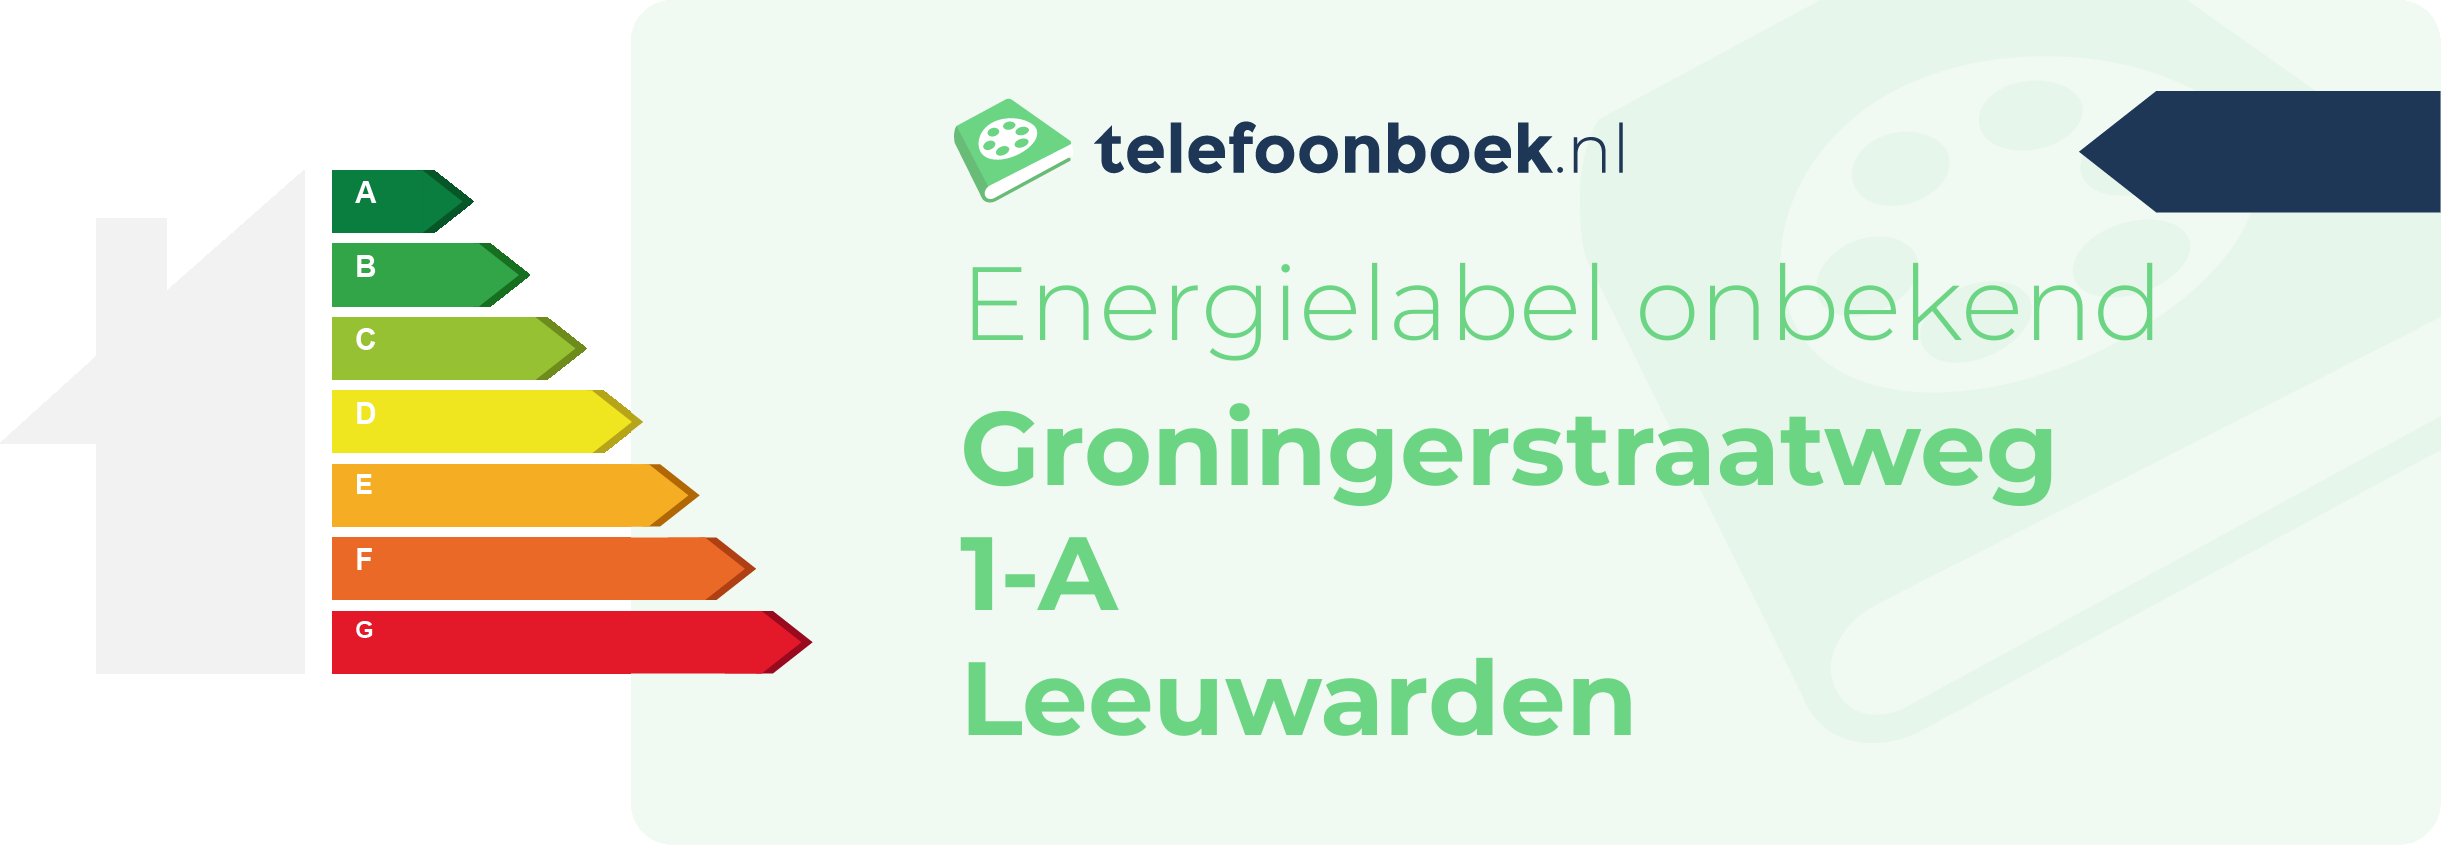 Energielabel Groningerstraatweg 1-A Leeuwarden